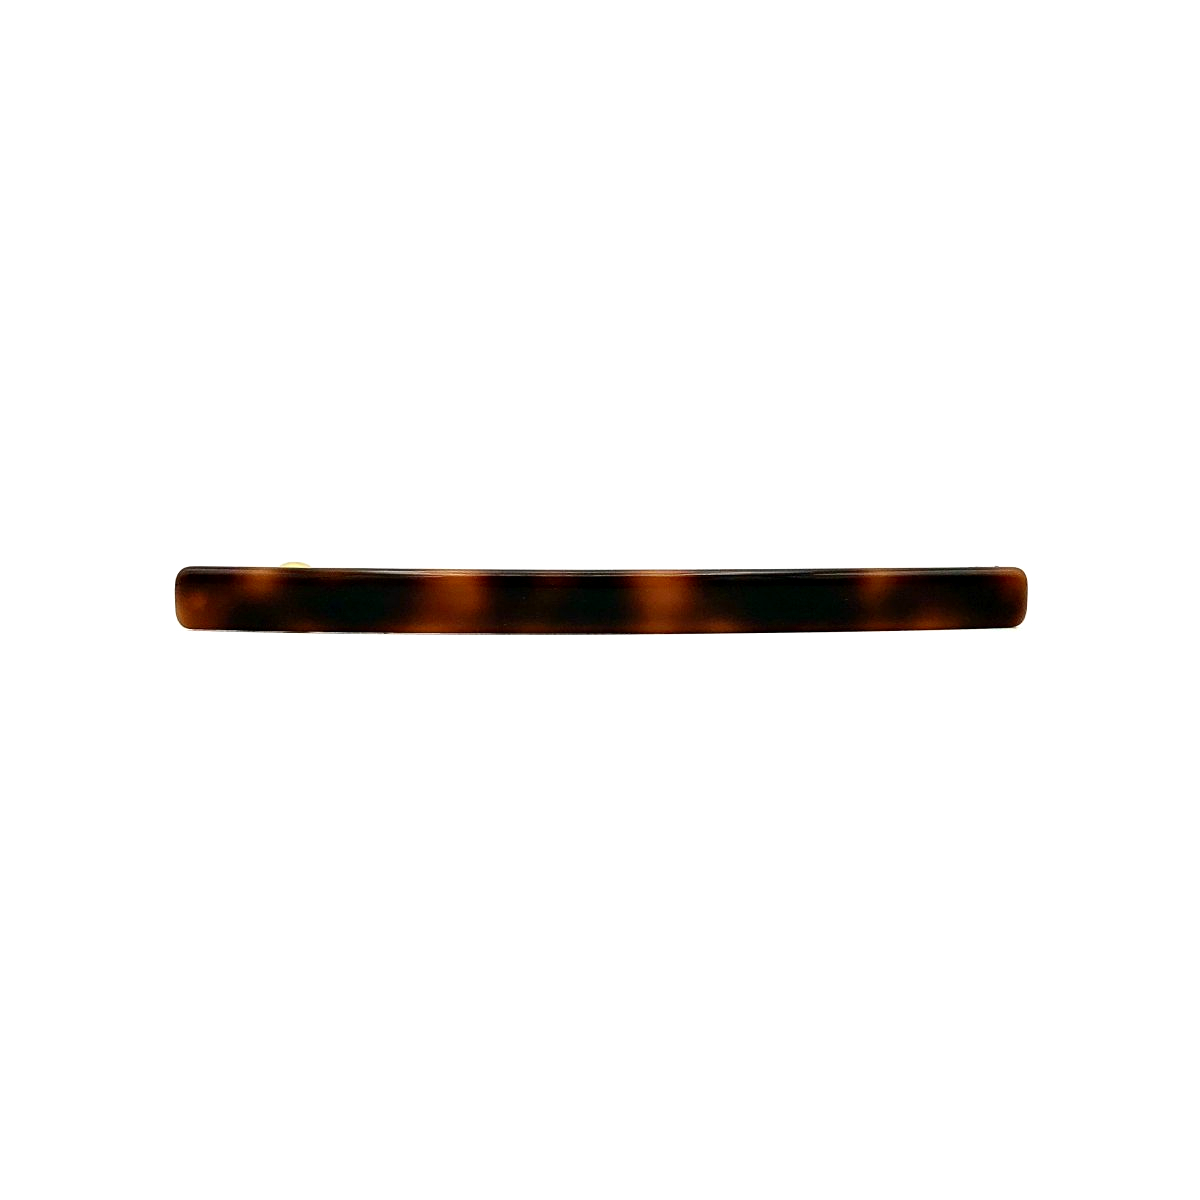 Haarspange rotbraun - lang, flach - 10,3 cm